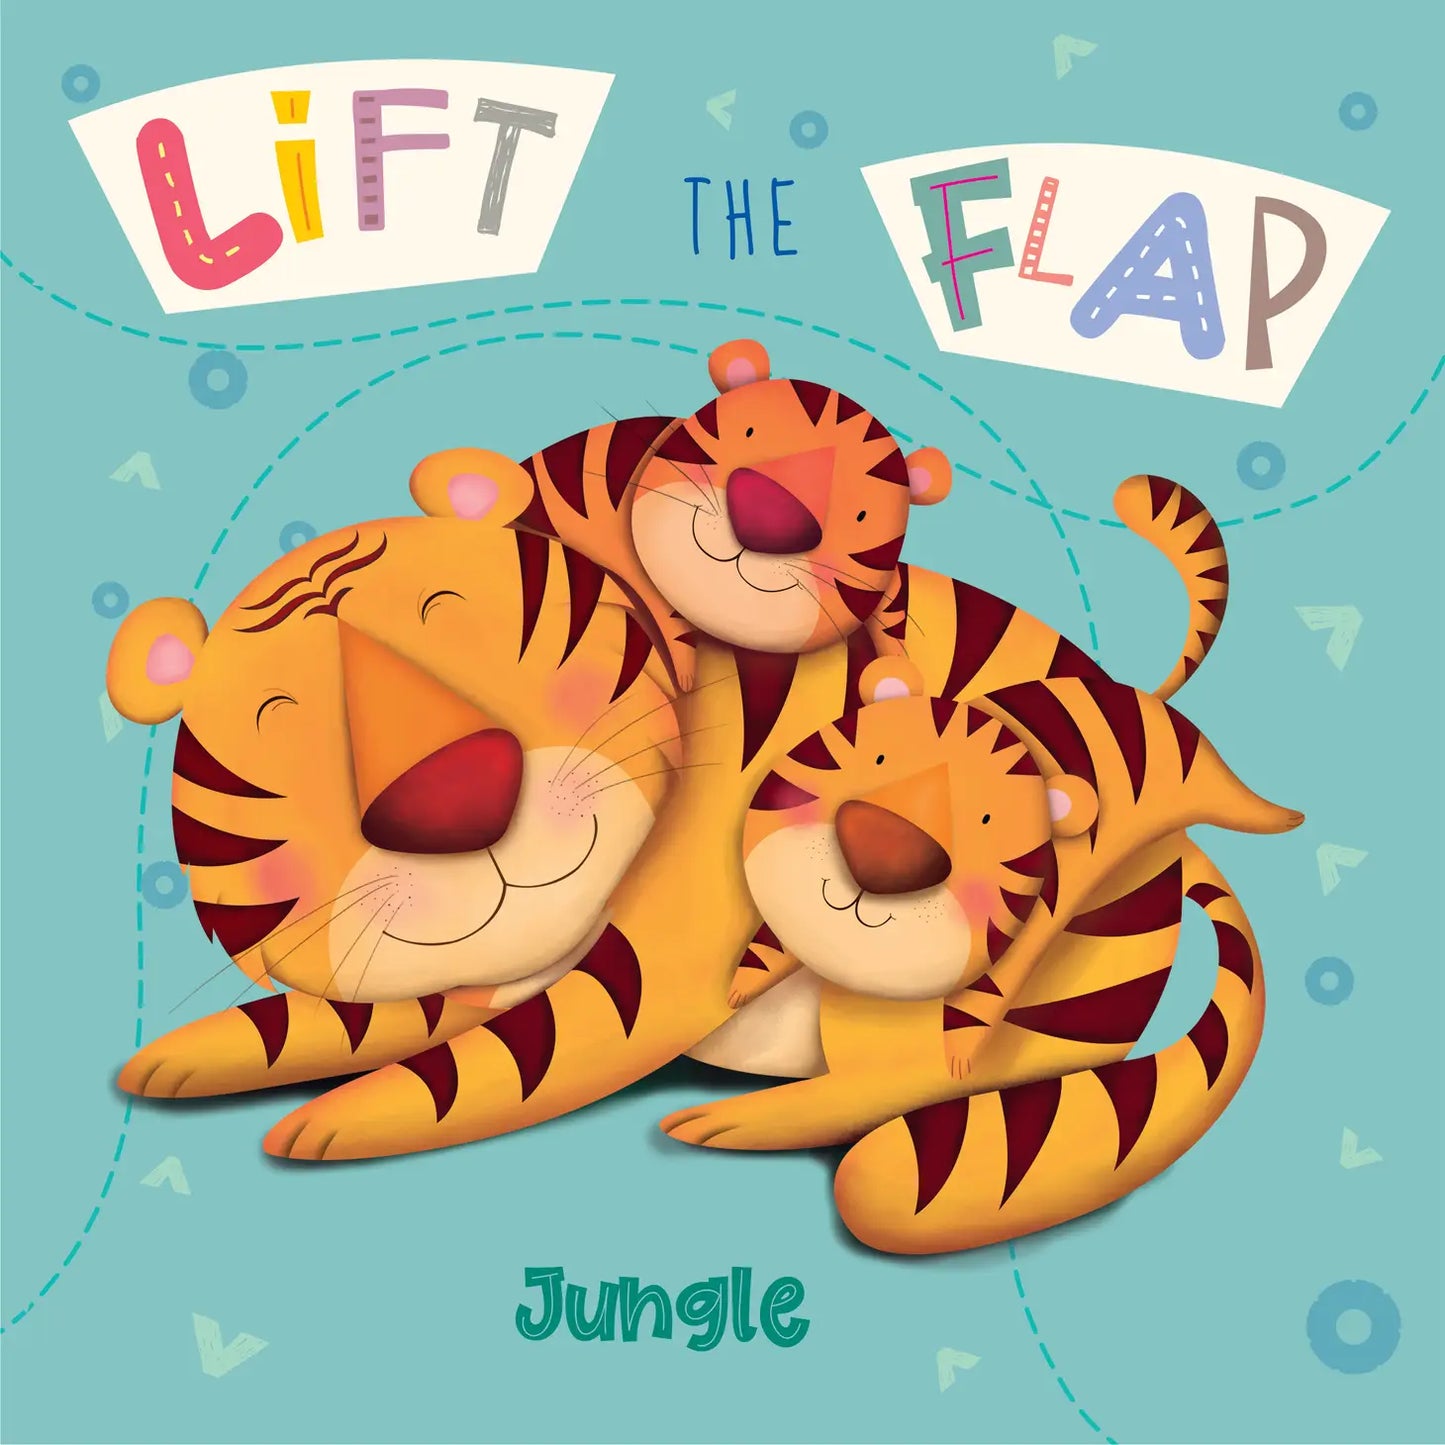 Lift-The-Flap Books - Multiple Themes